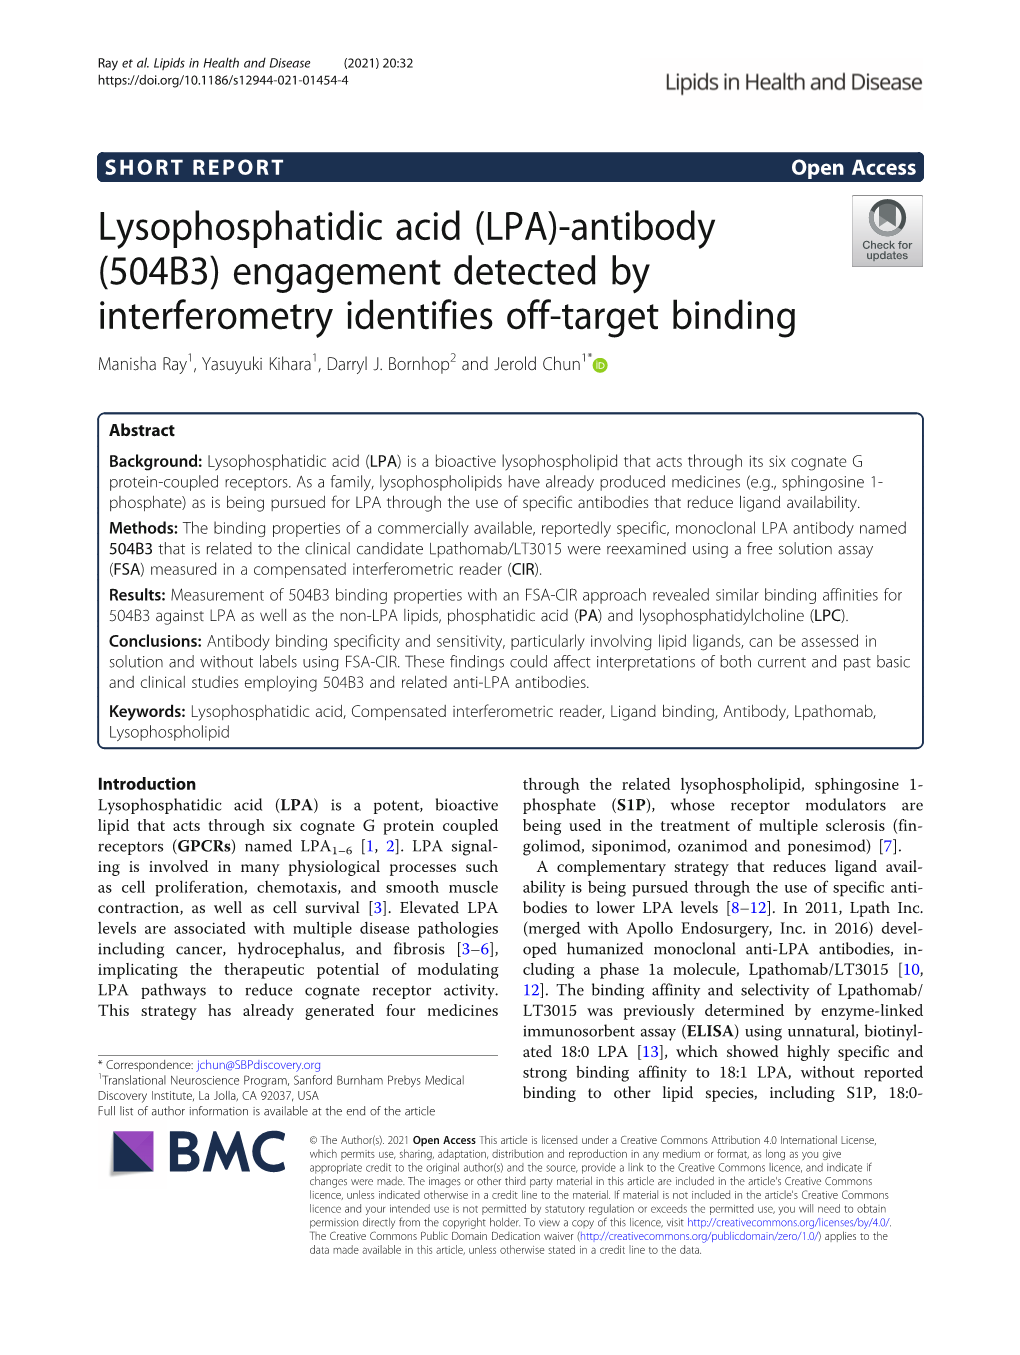 Lysophosphatidic Acid (LPA)-Antibody (504B3) Engagement Detected by Interferometry Identifies Off-Target Binding Manisha Ray1, Yasuyuki Kihara1, Darryl J